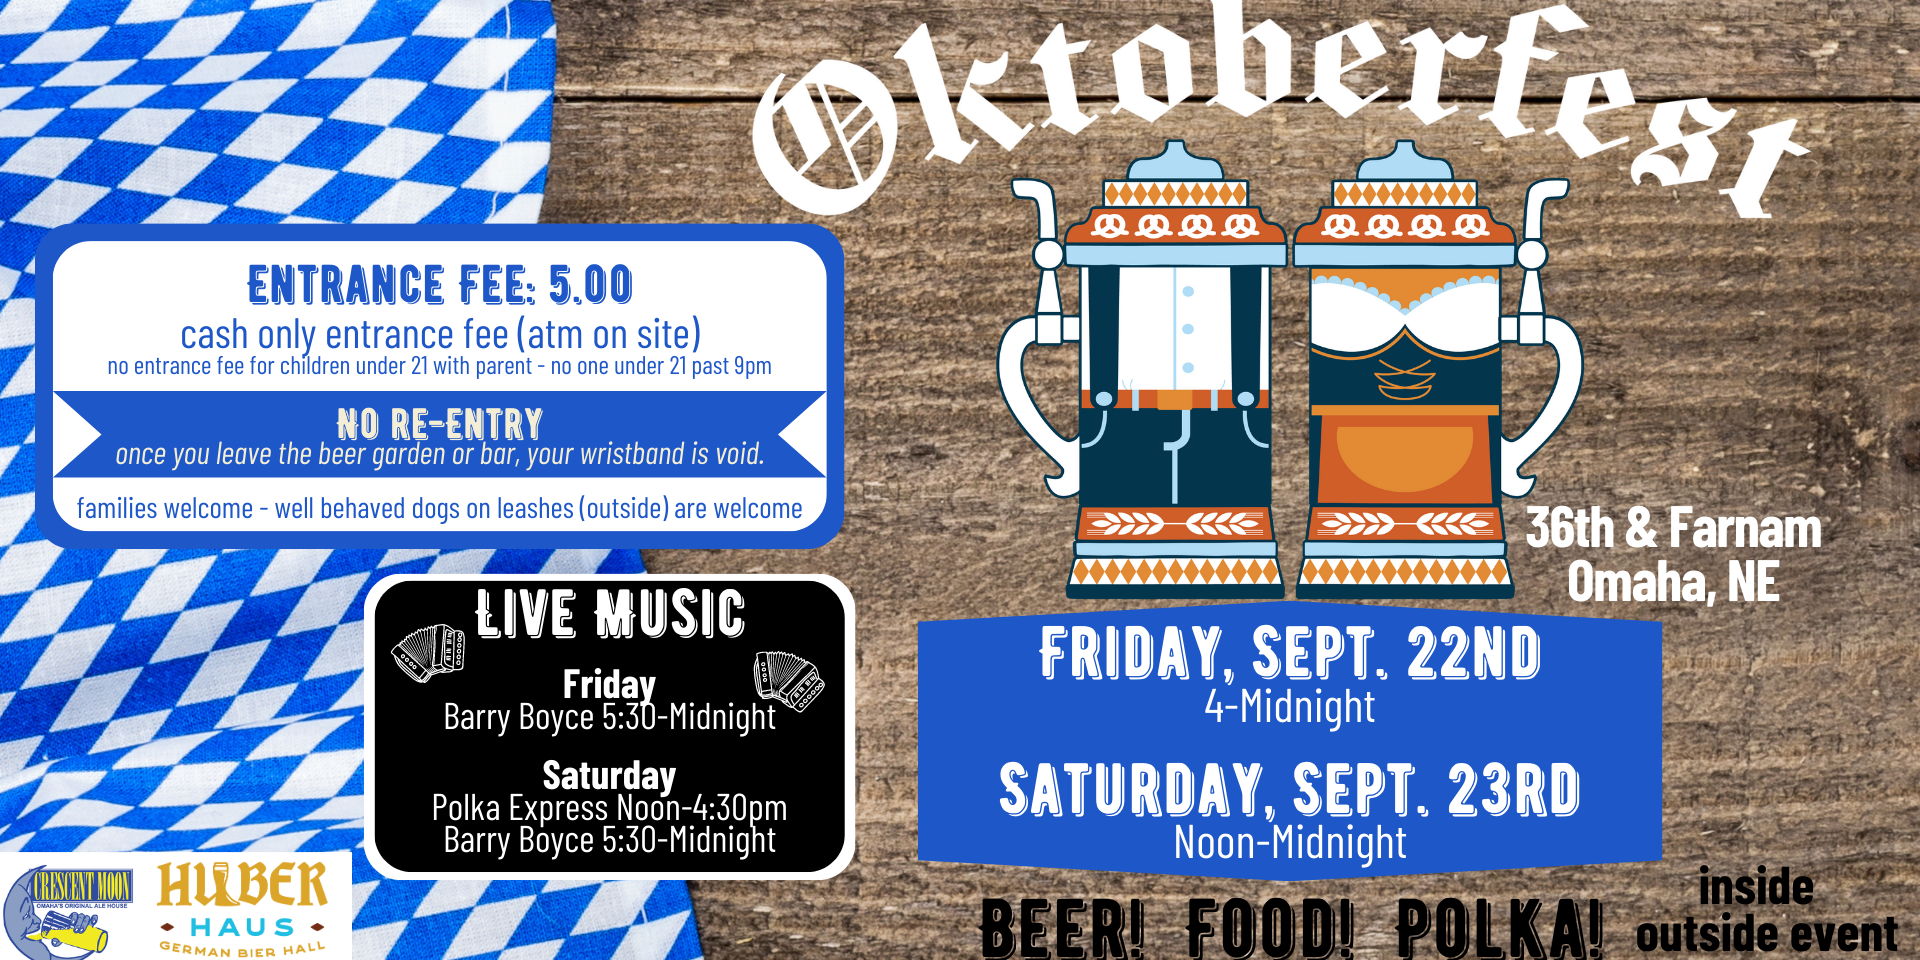 22nd Annual Oktoberfest on Beer Corner USA promotional image